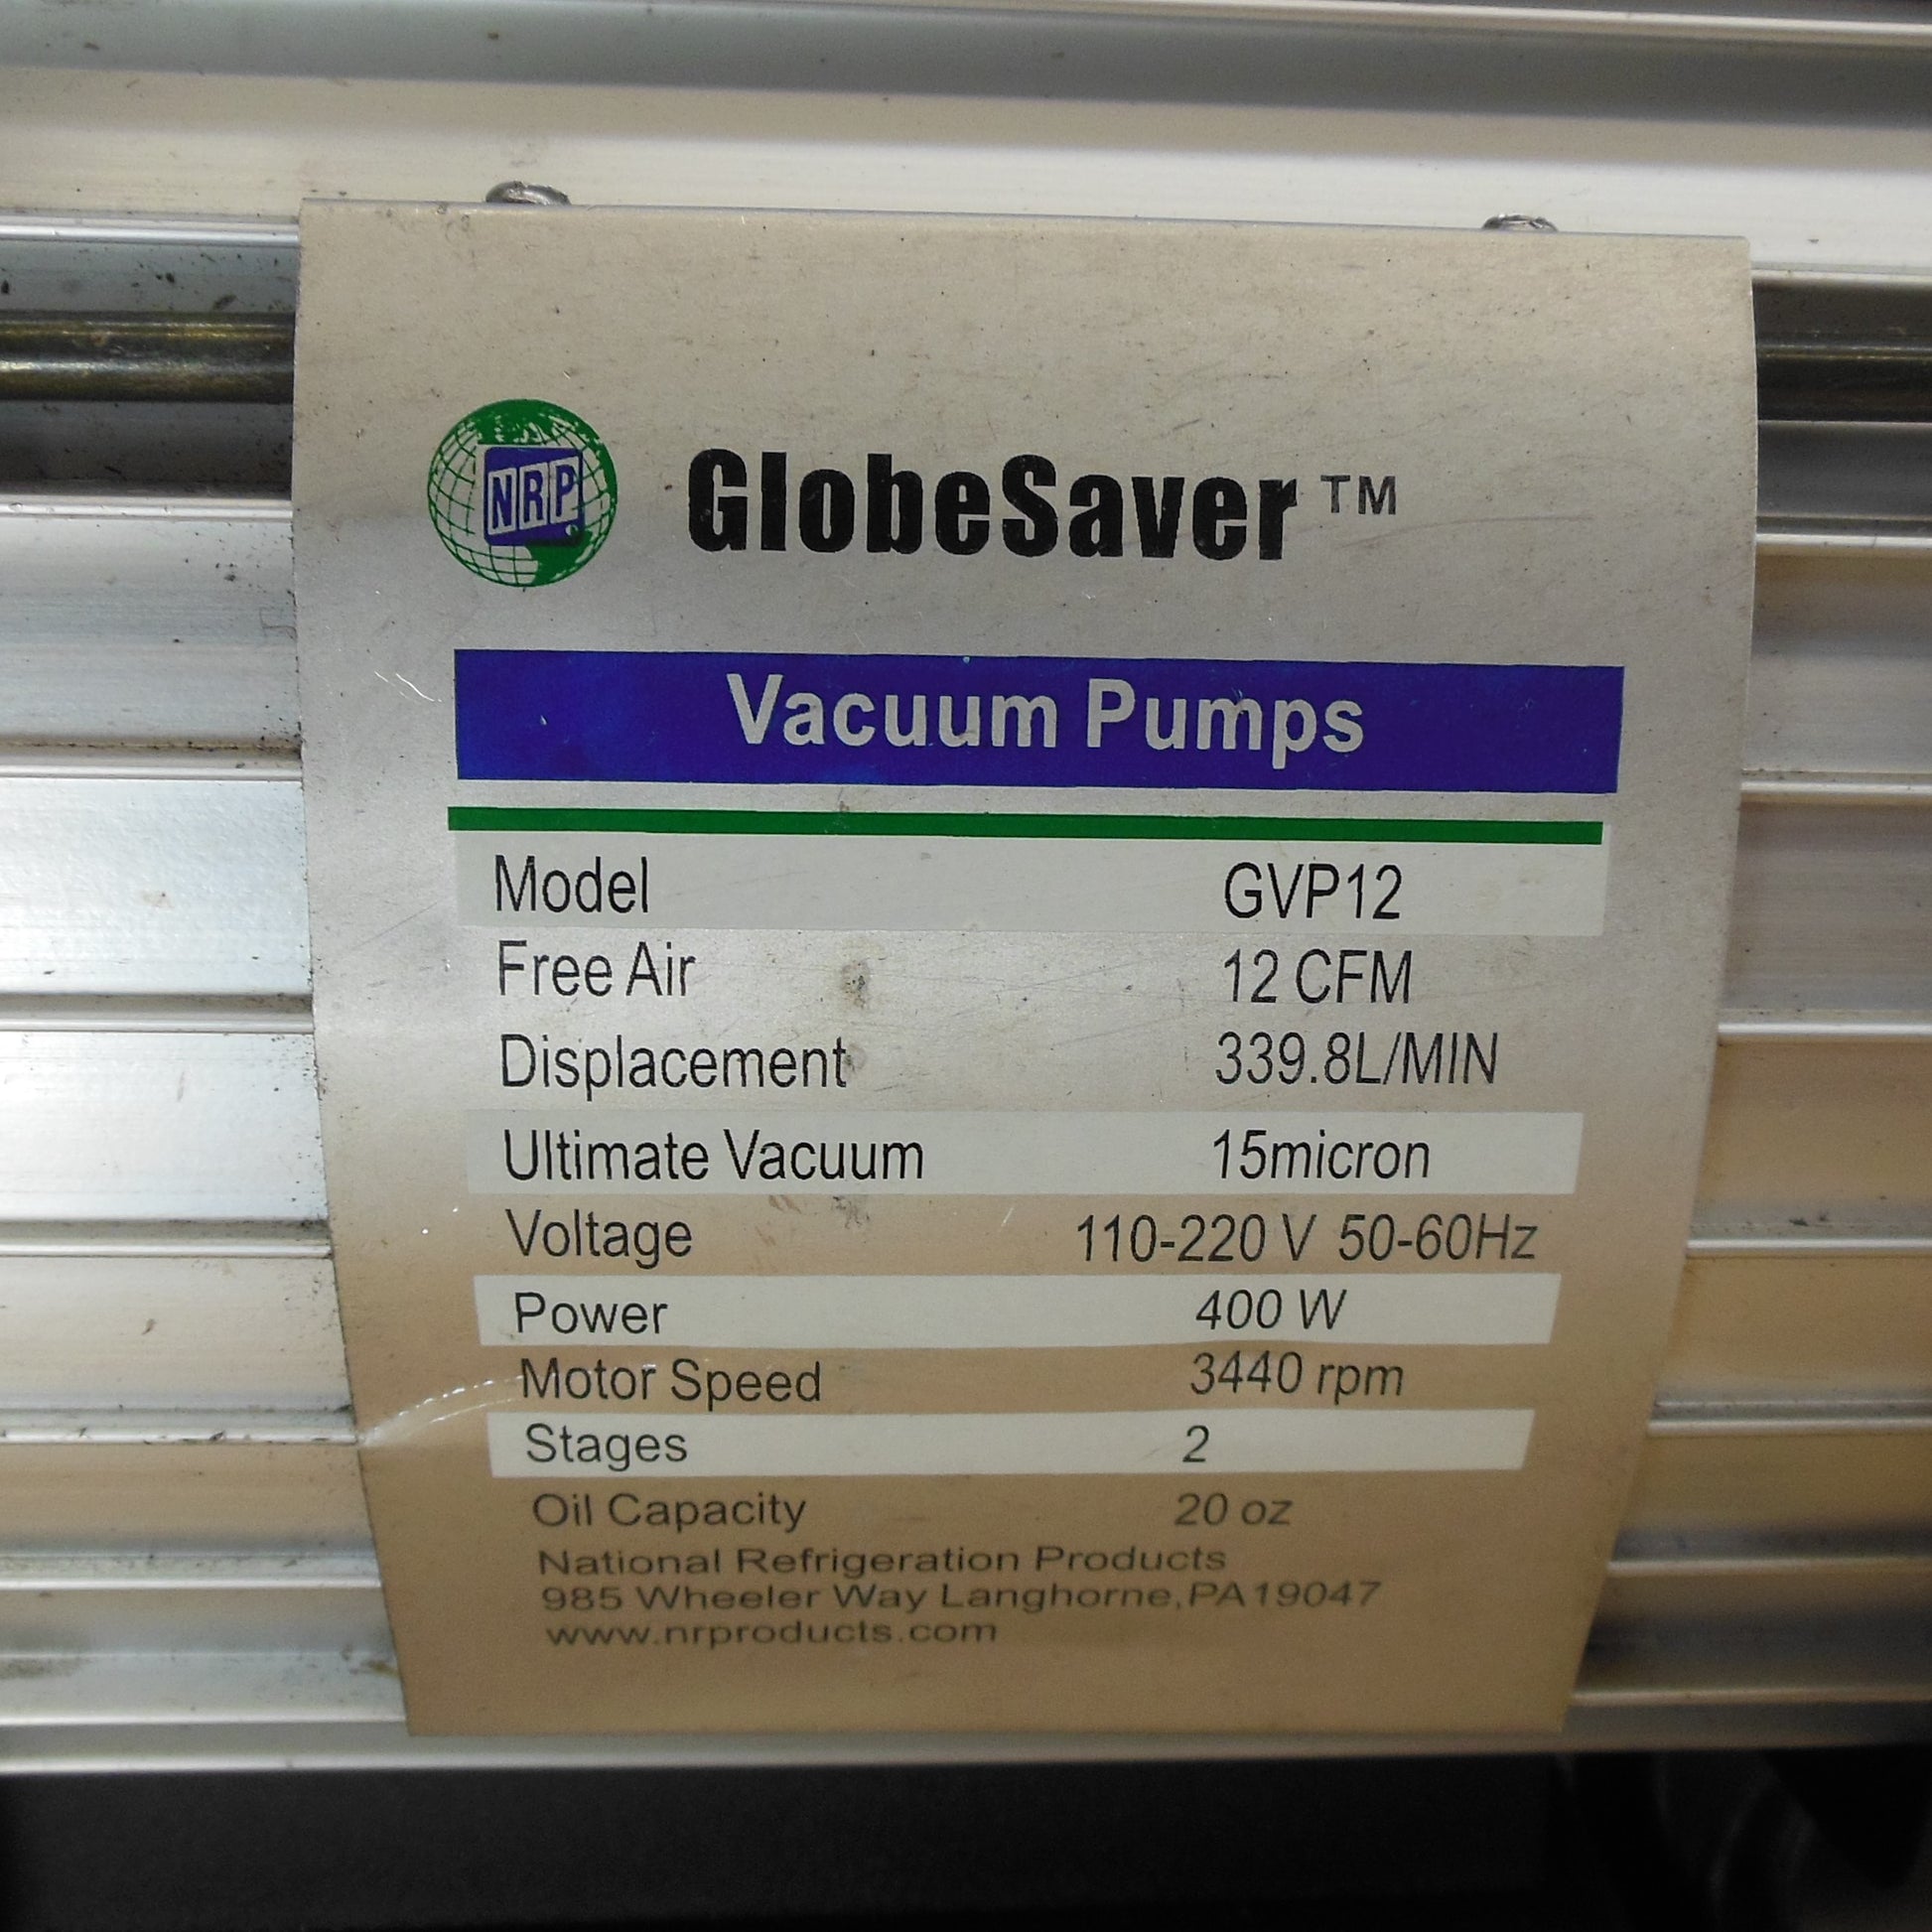 NRP Globesaver Refrigerant Vacuum Pump GVP12 Specification tag